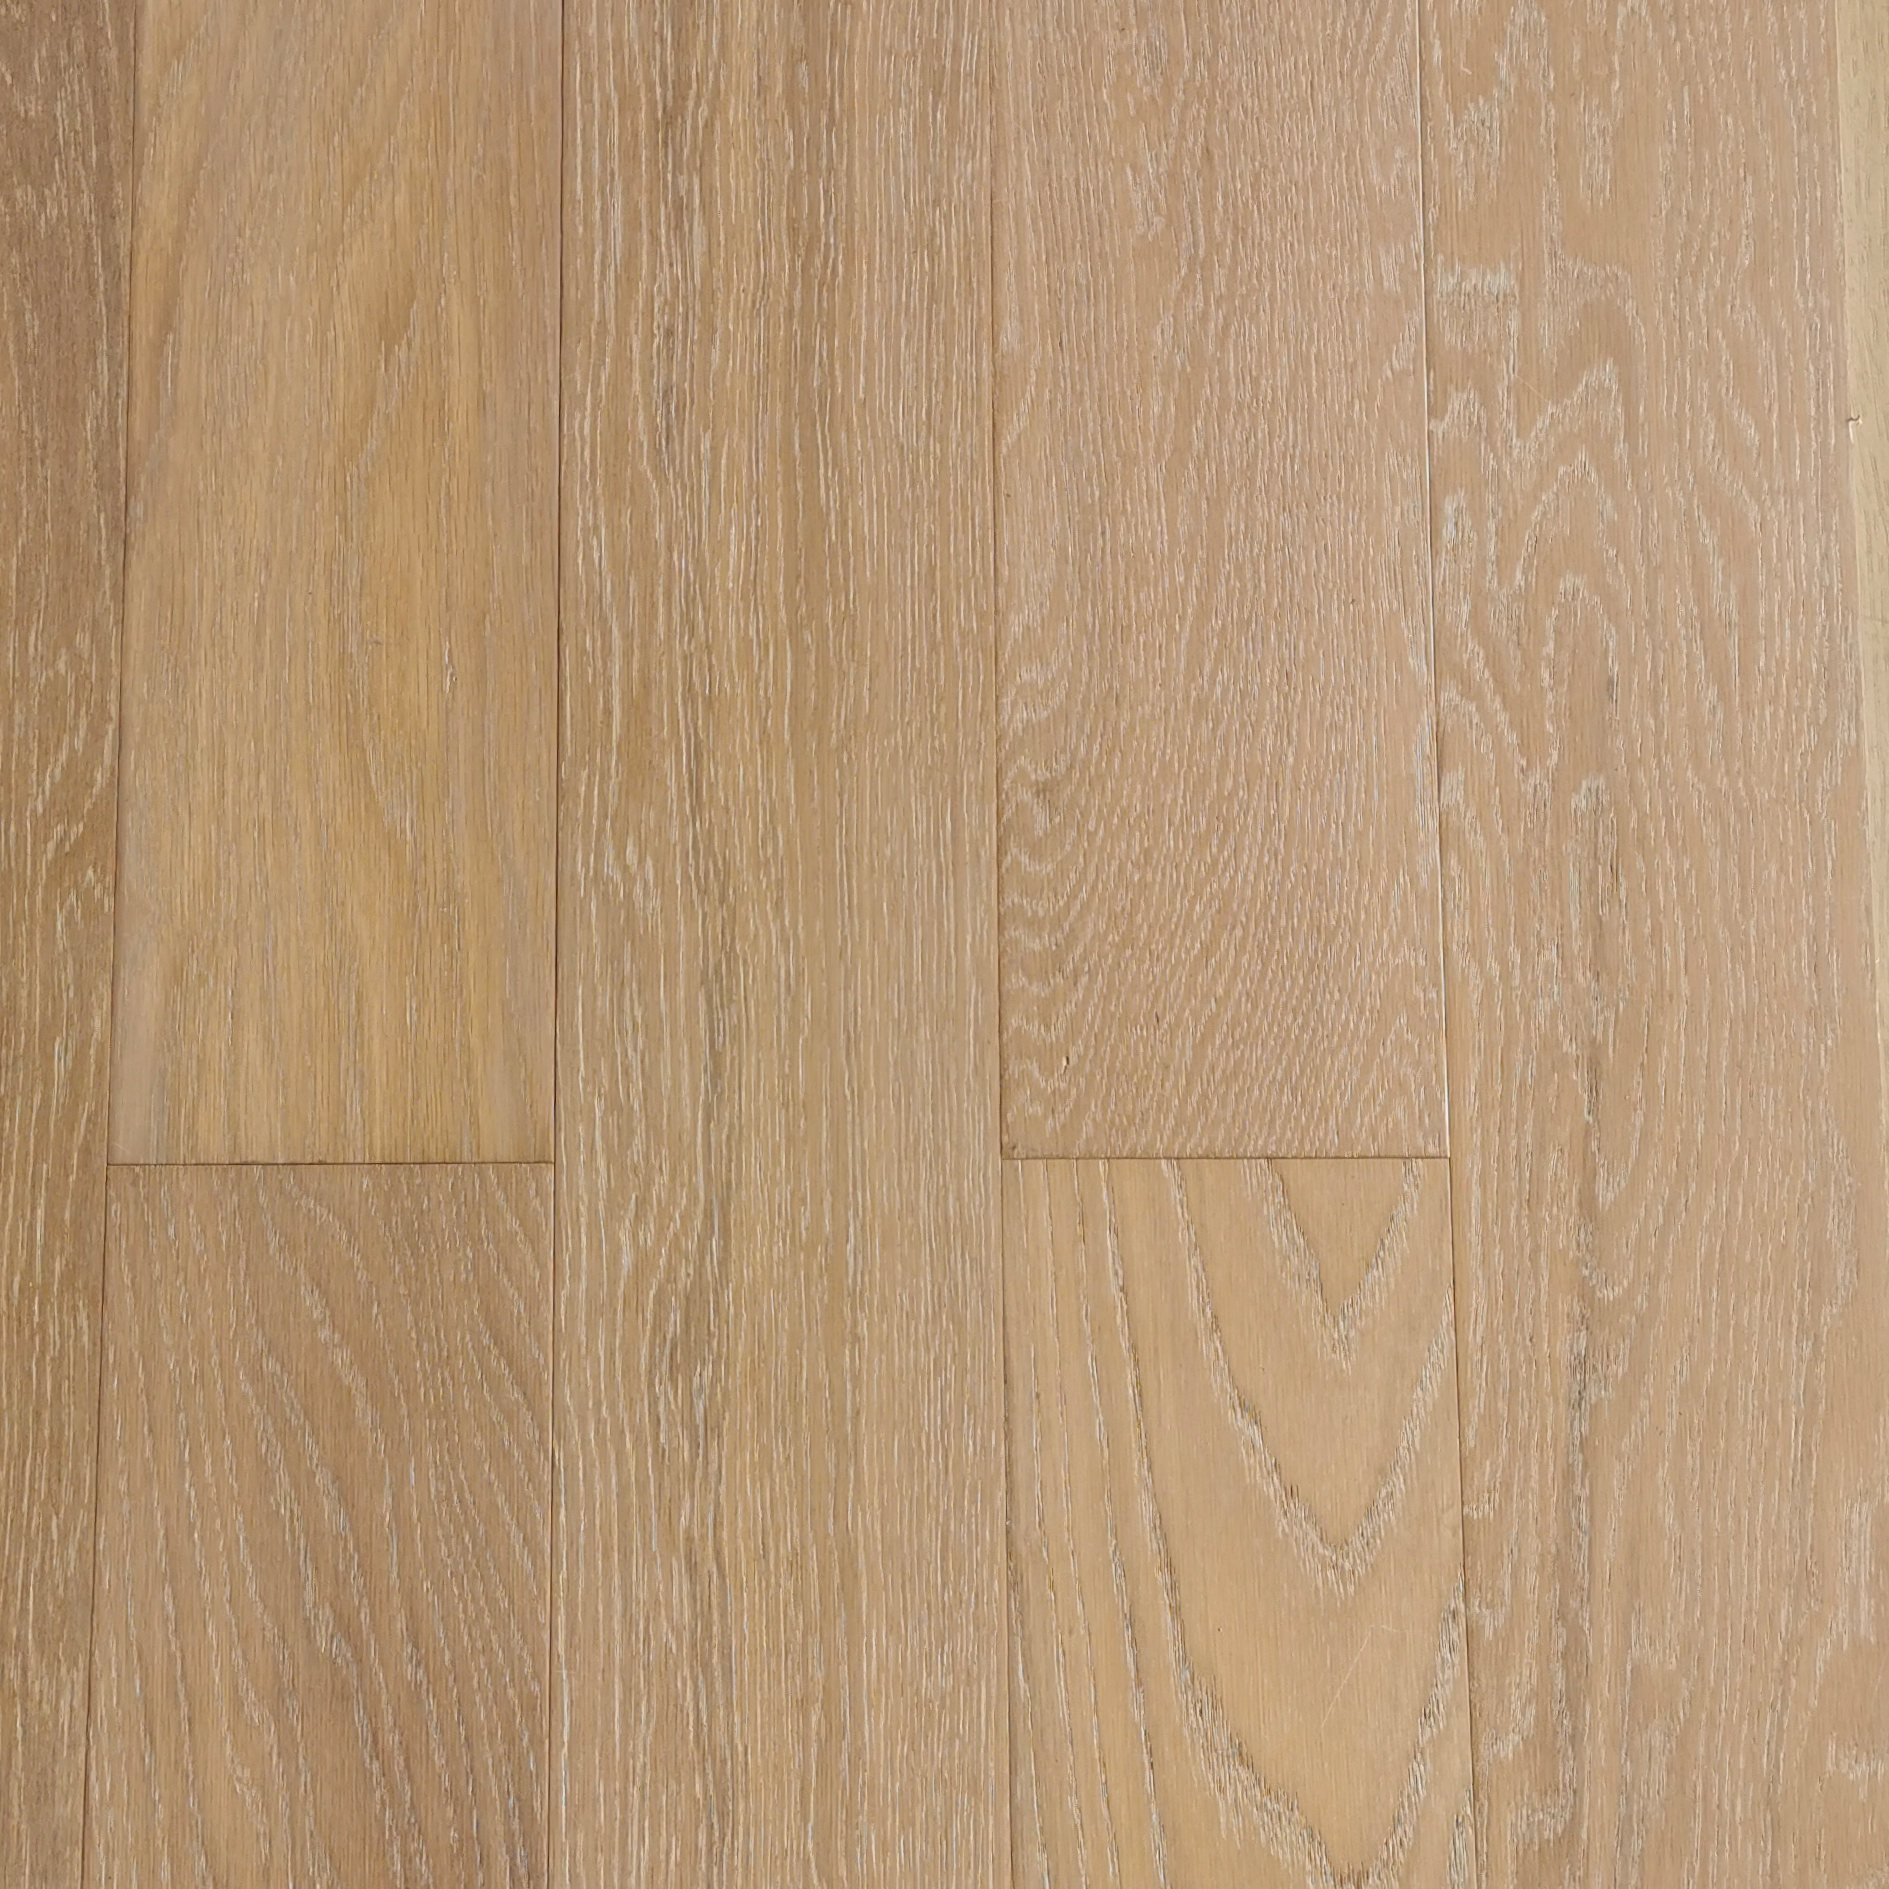 2020 wholesale price Pegged Wood Floor -
  New Environmental of Natural Solid Wood Veneer SPC Flooring – Kangton